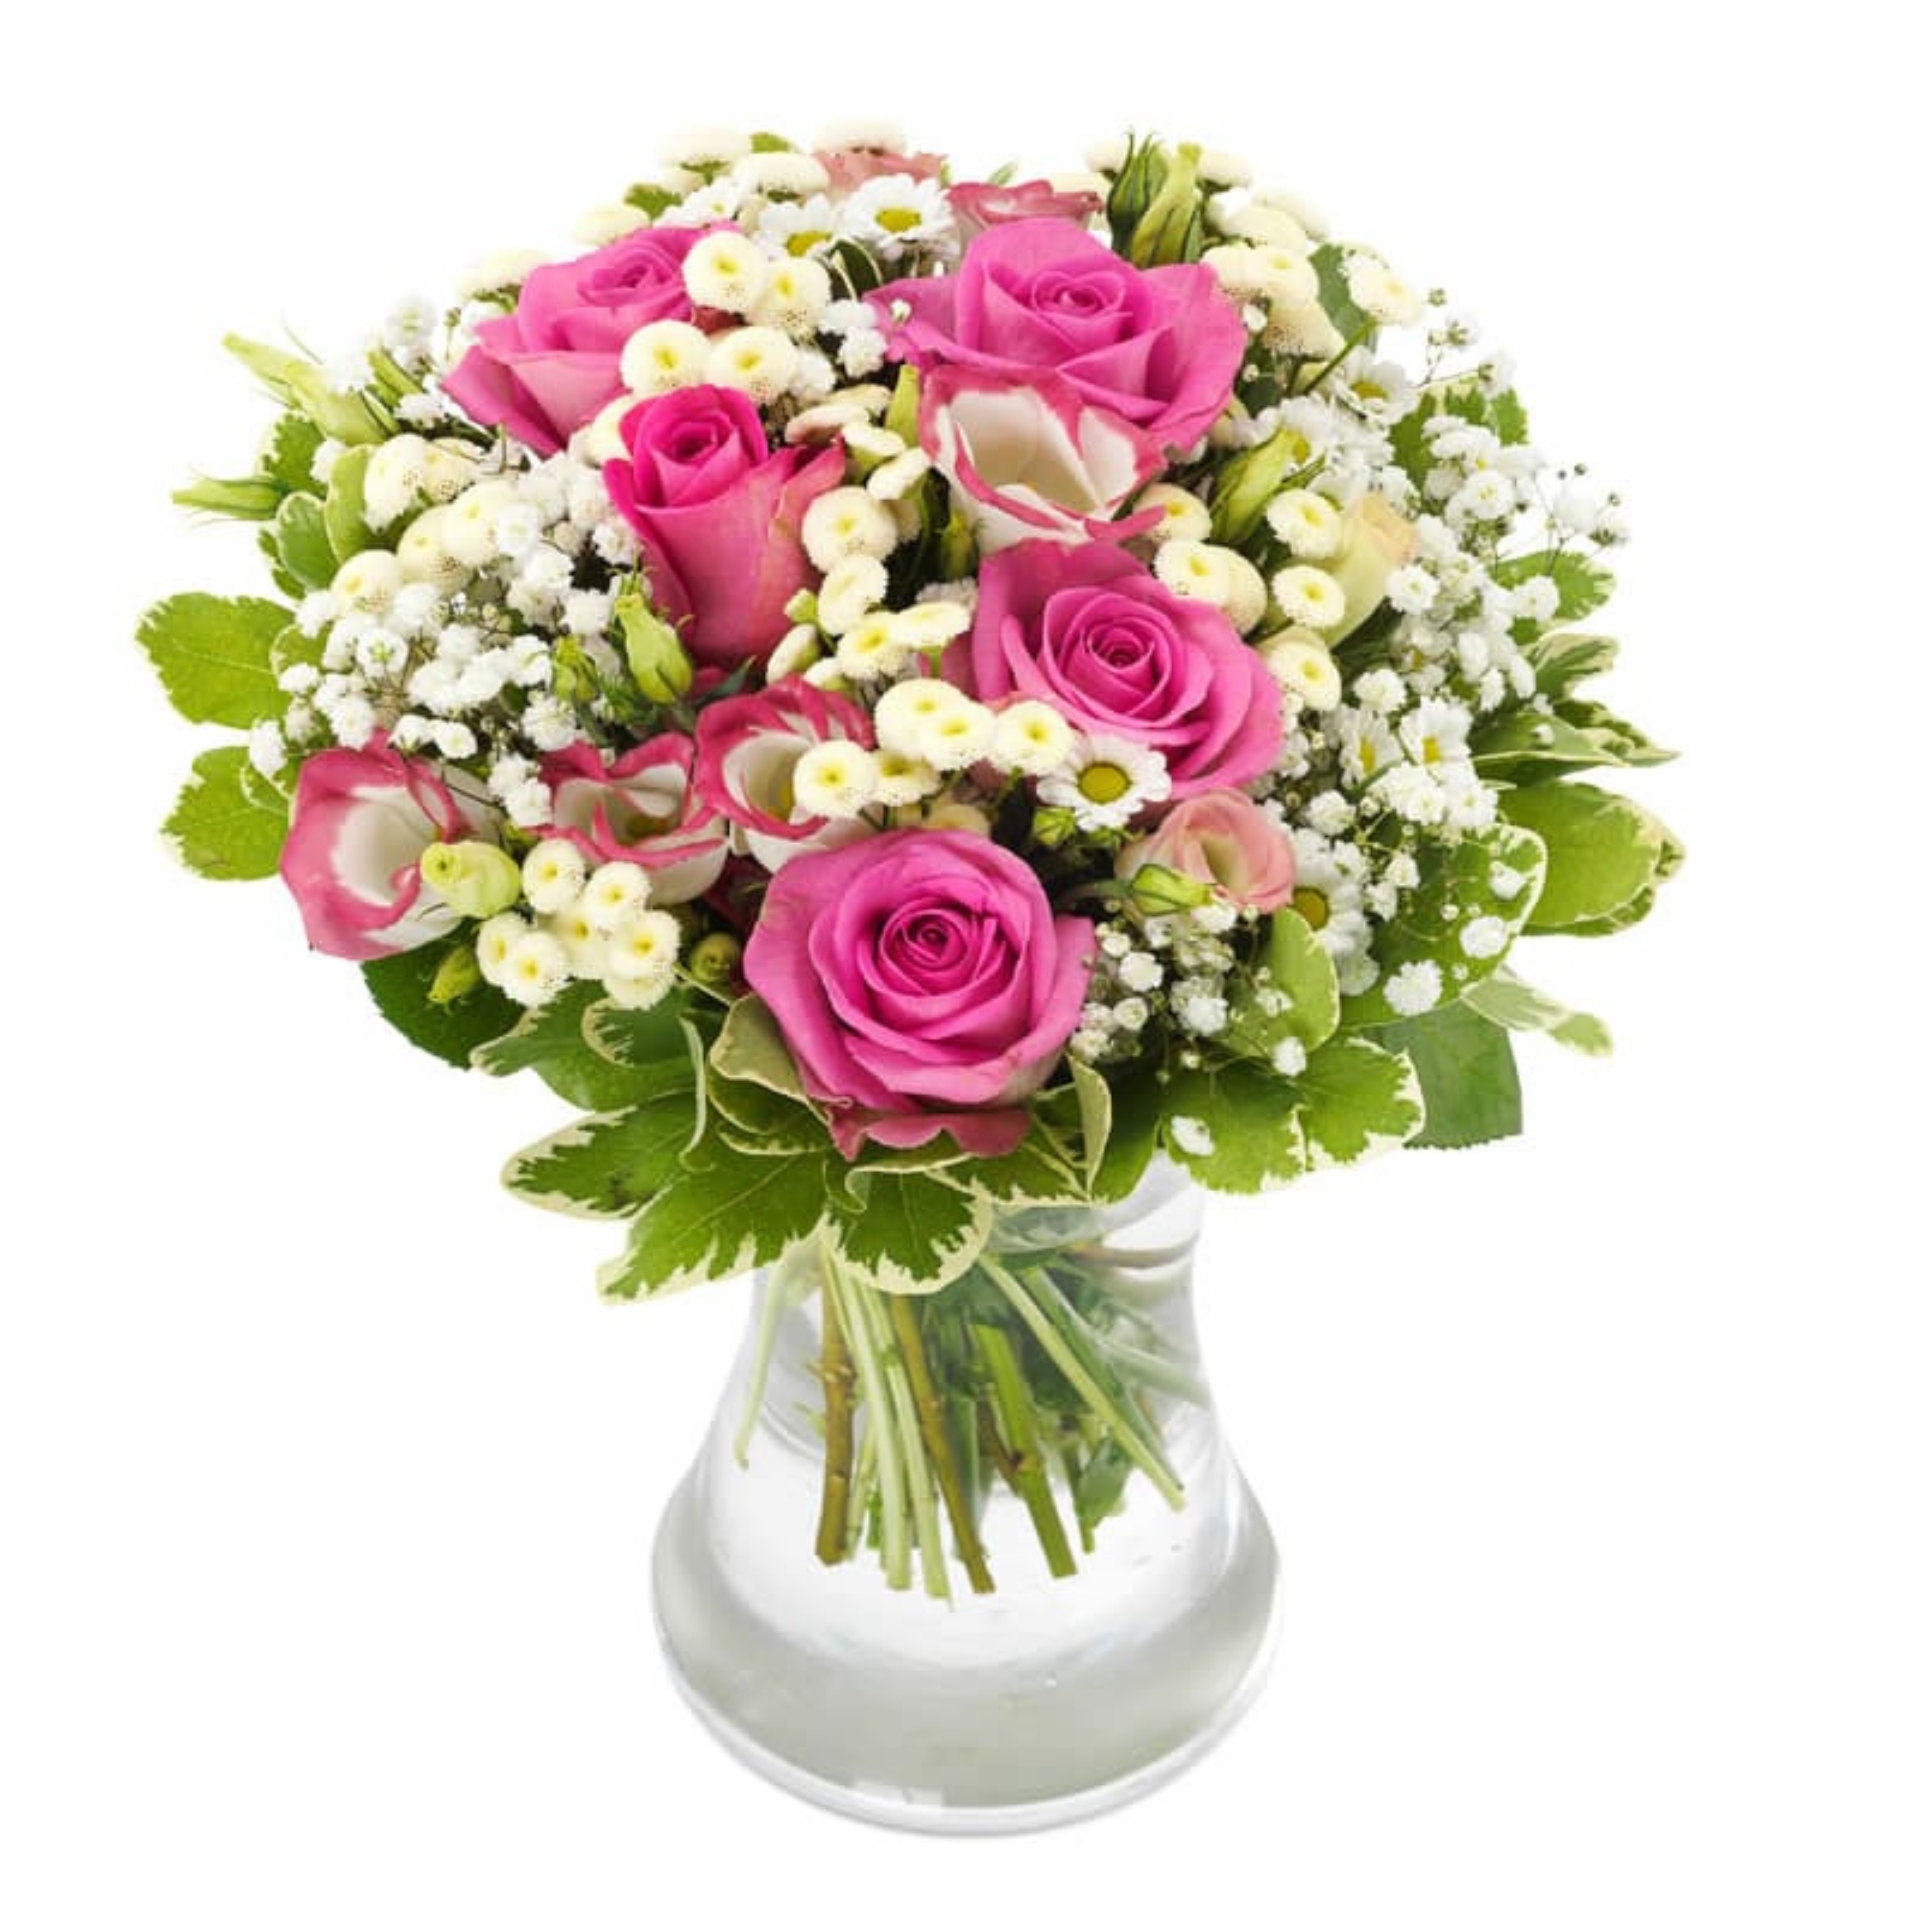 Rosenschoenheit-online-verschicken-mit-pinken-rosen